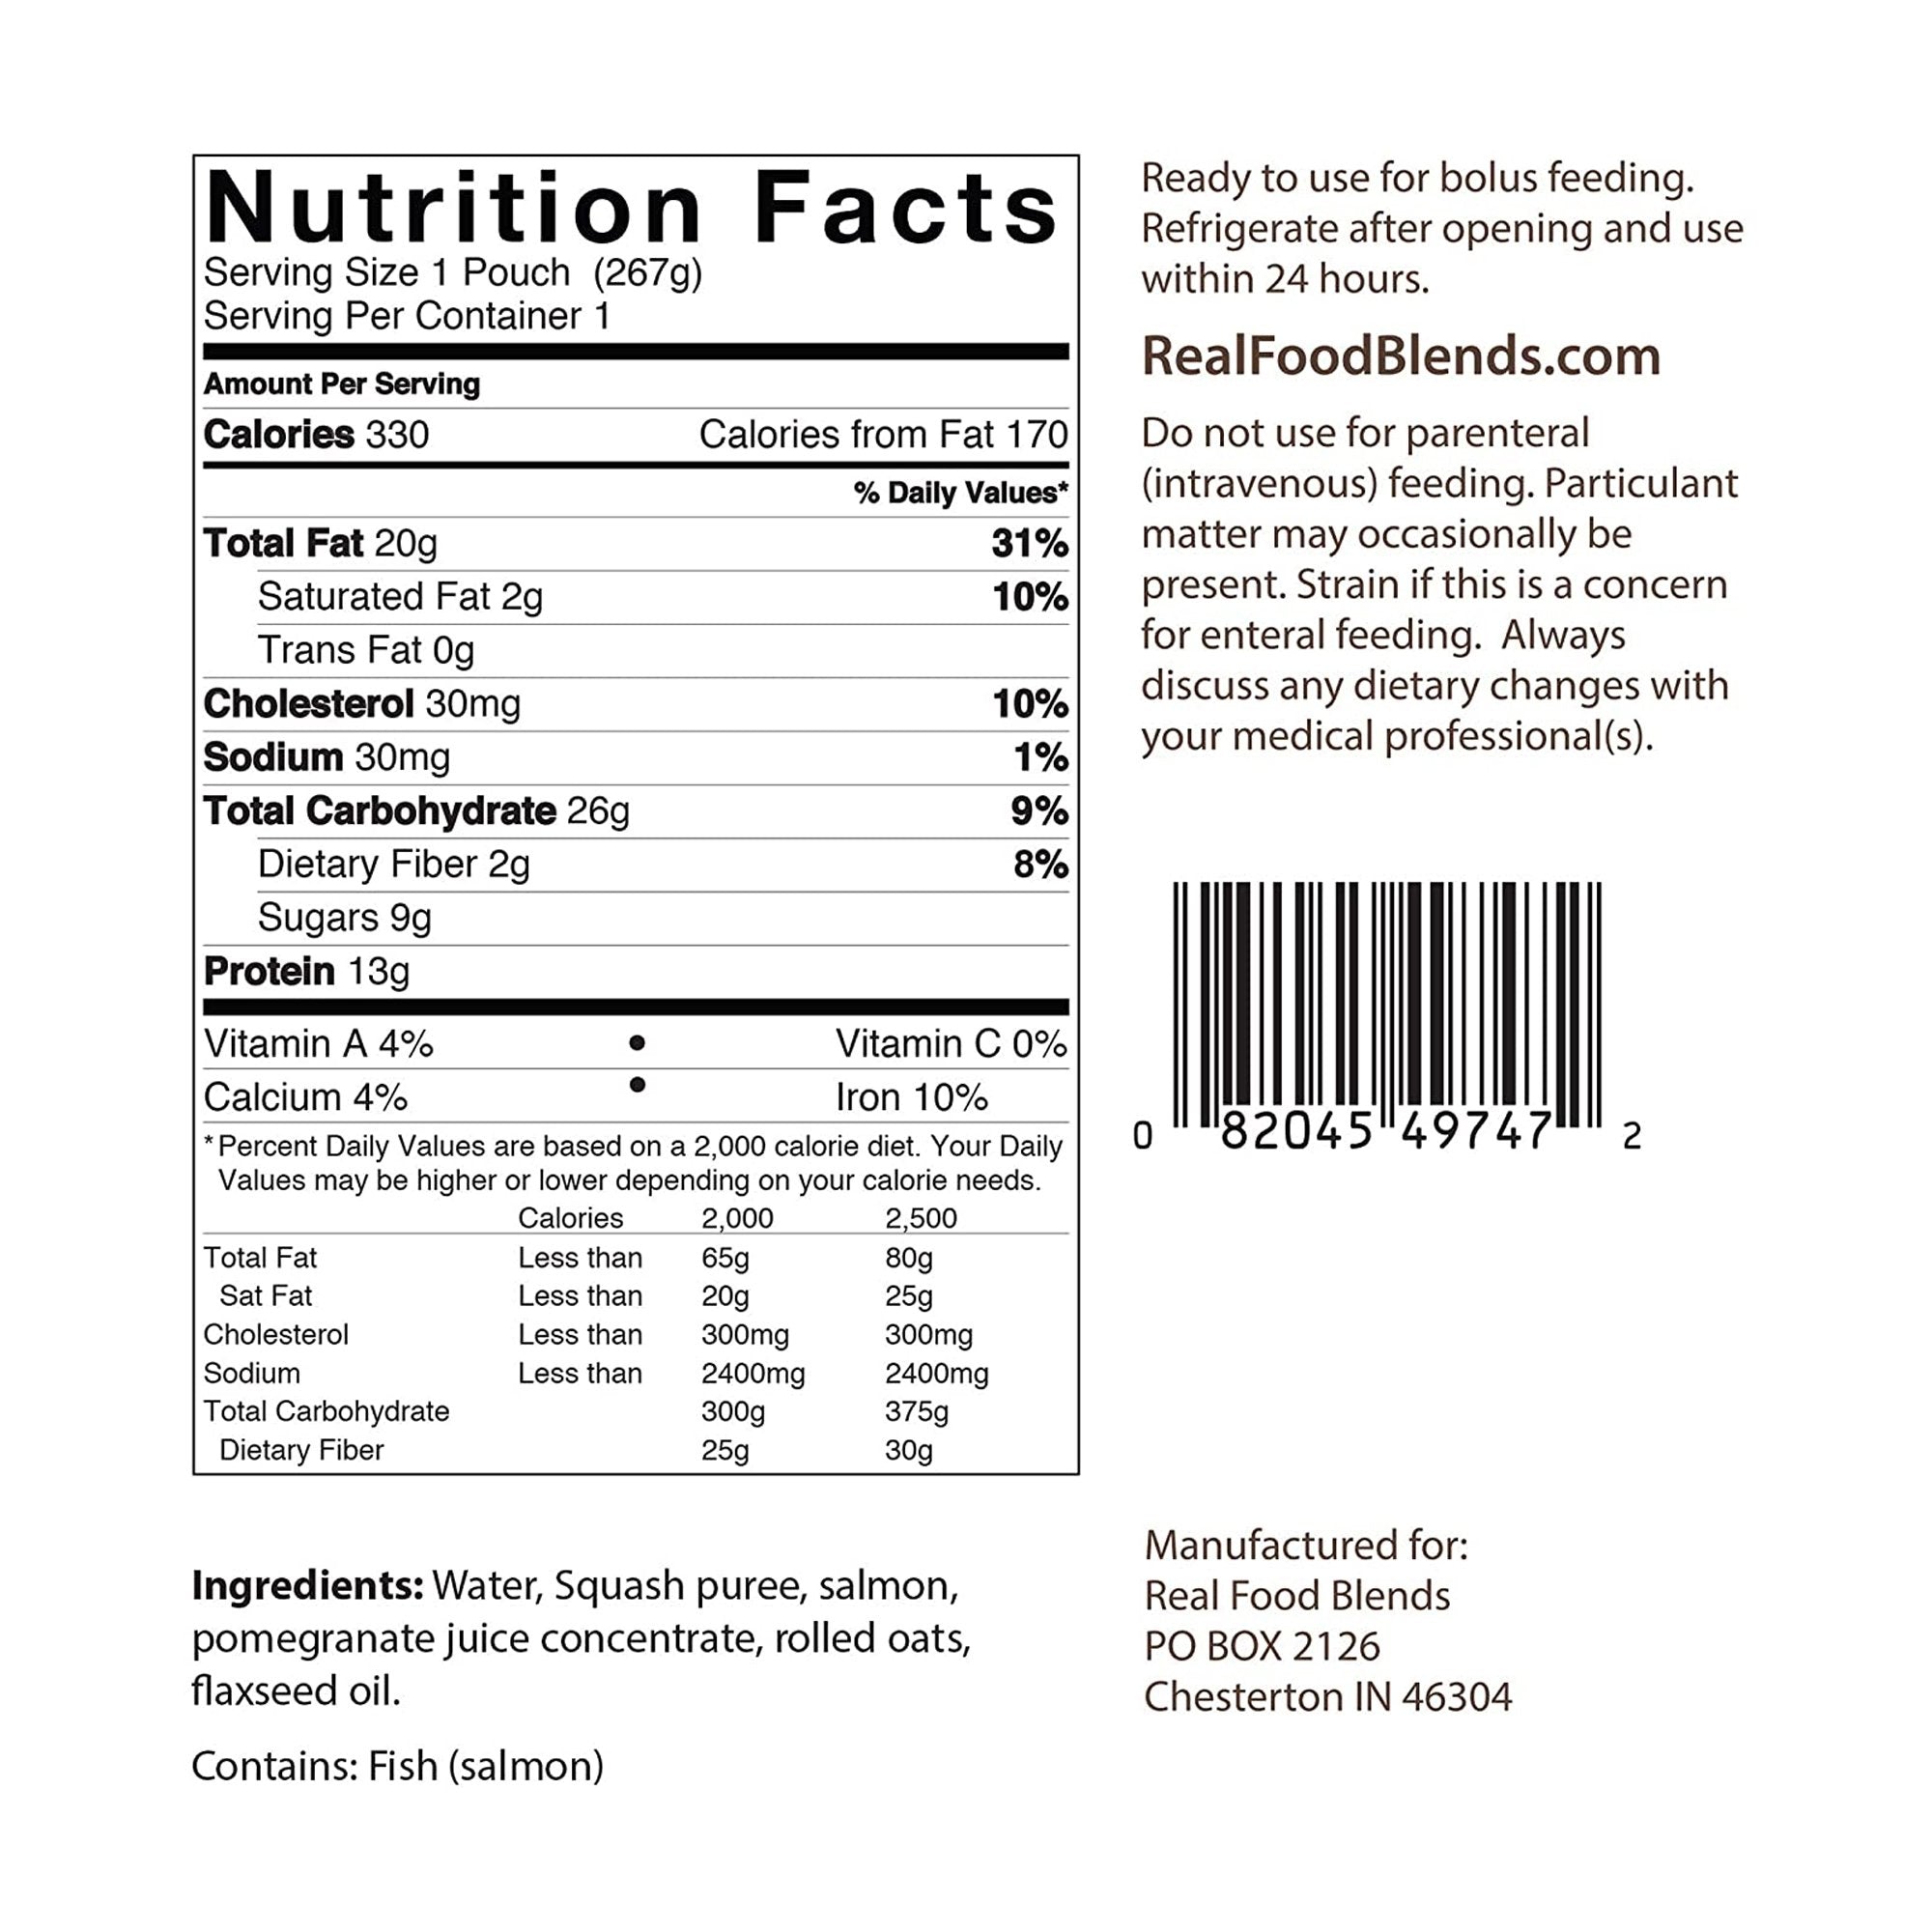 Tube Feeding Formula Real Food Blends Salmon Oats / Squash Flavor Liquid 9.4 oz. Pouch